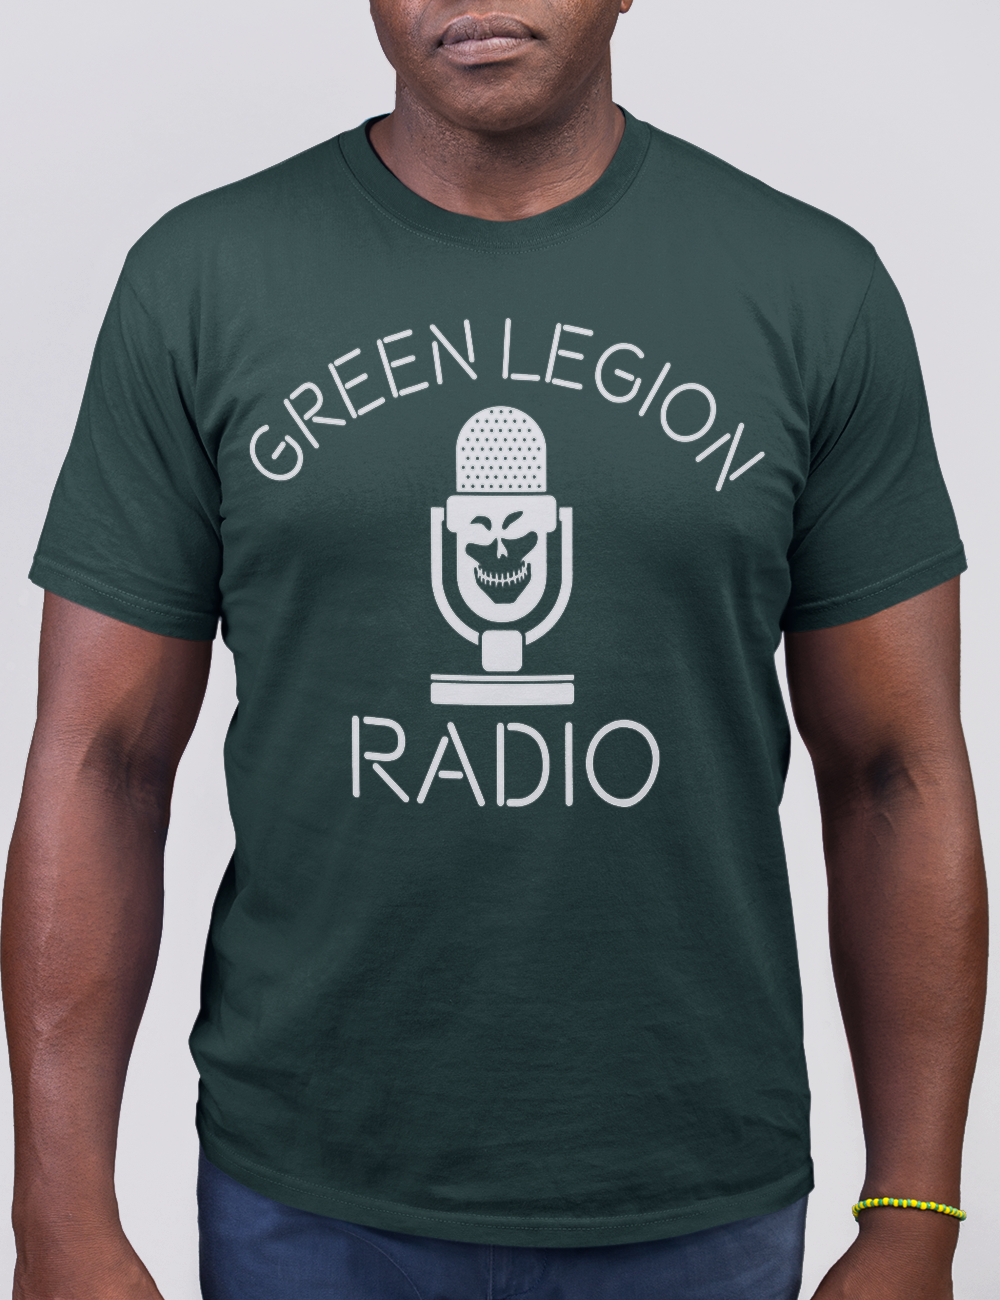 Green Legion Radio T-Shirt